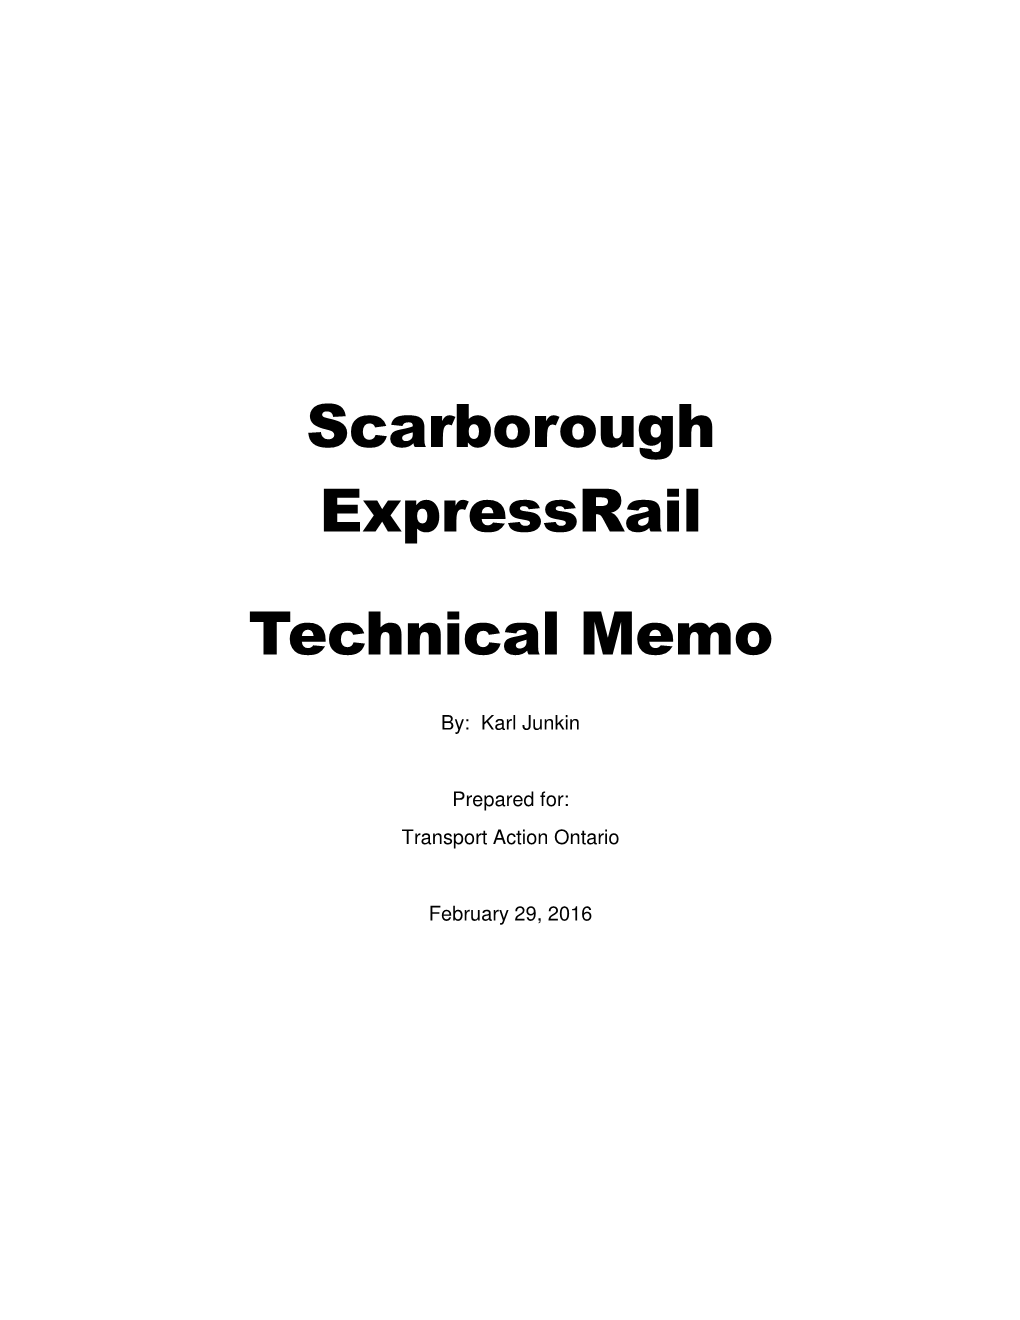 Scarborough Expressrail Technical Memo